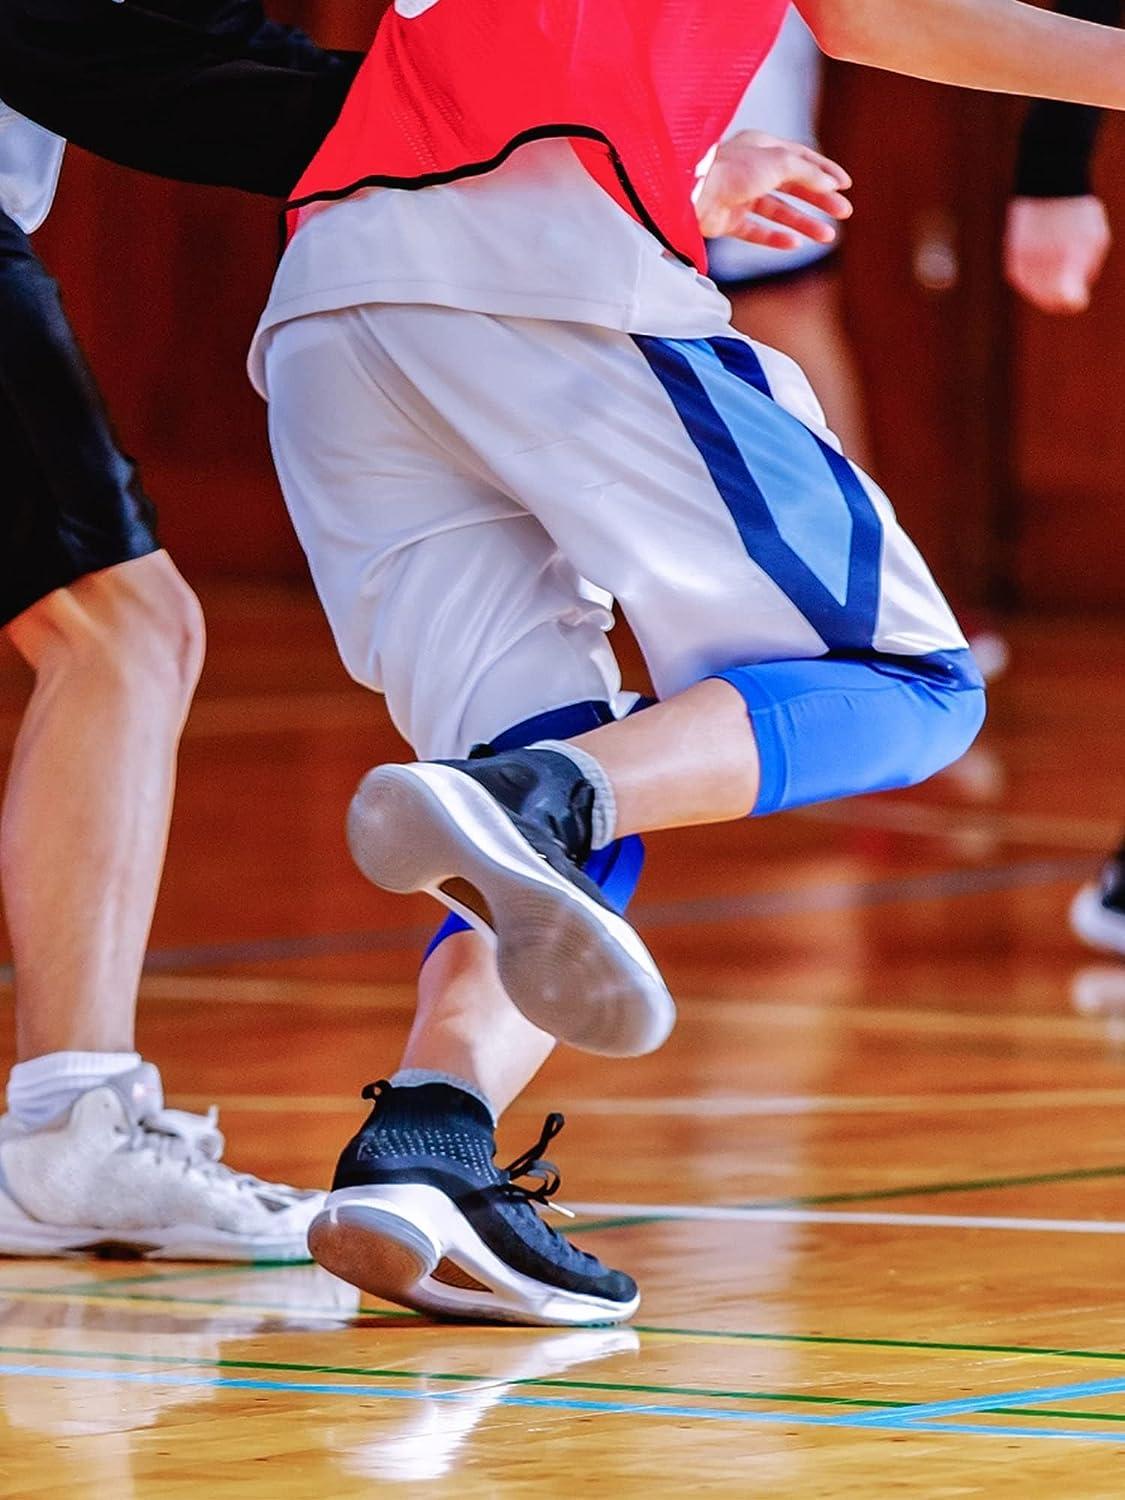 Sports Gym Basketball Pants with Knee Pads Basic Leggings 3/4